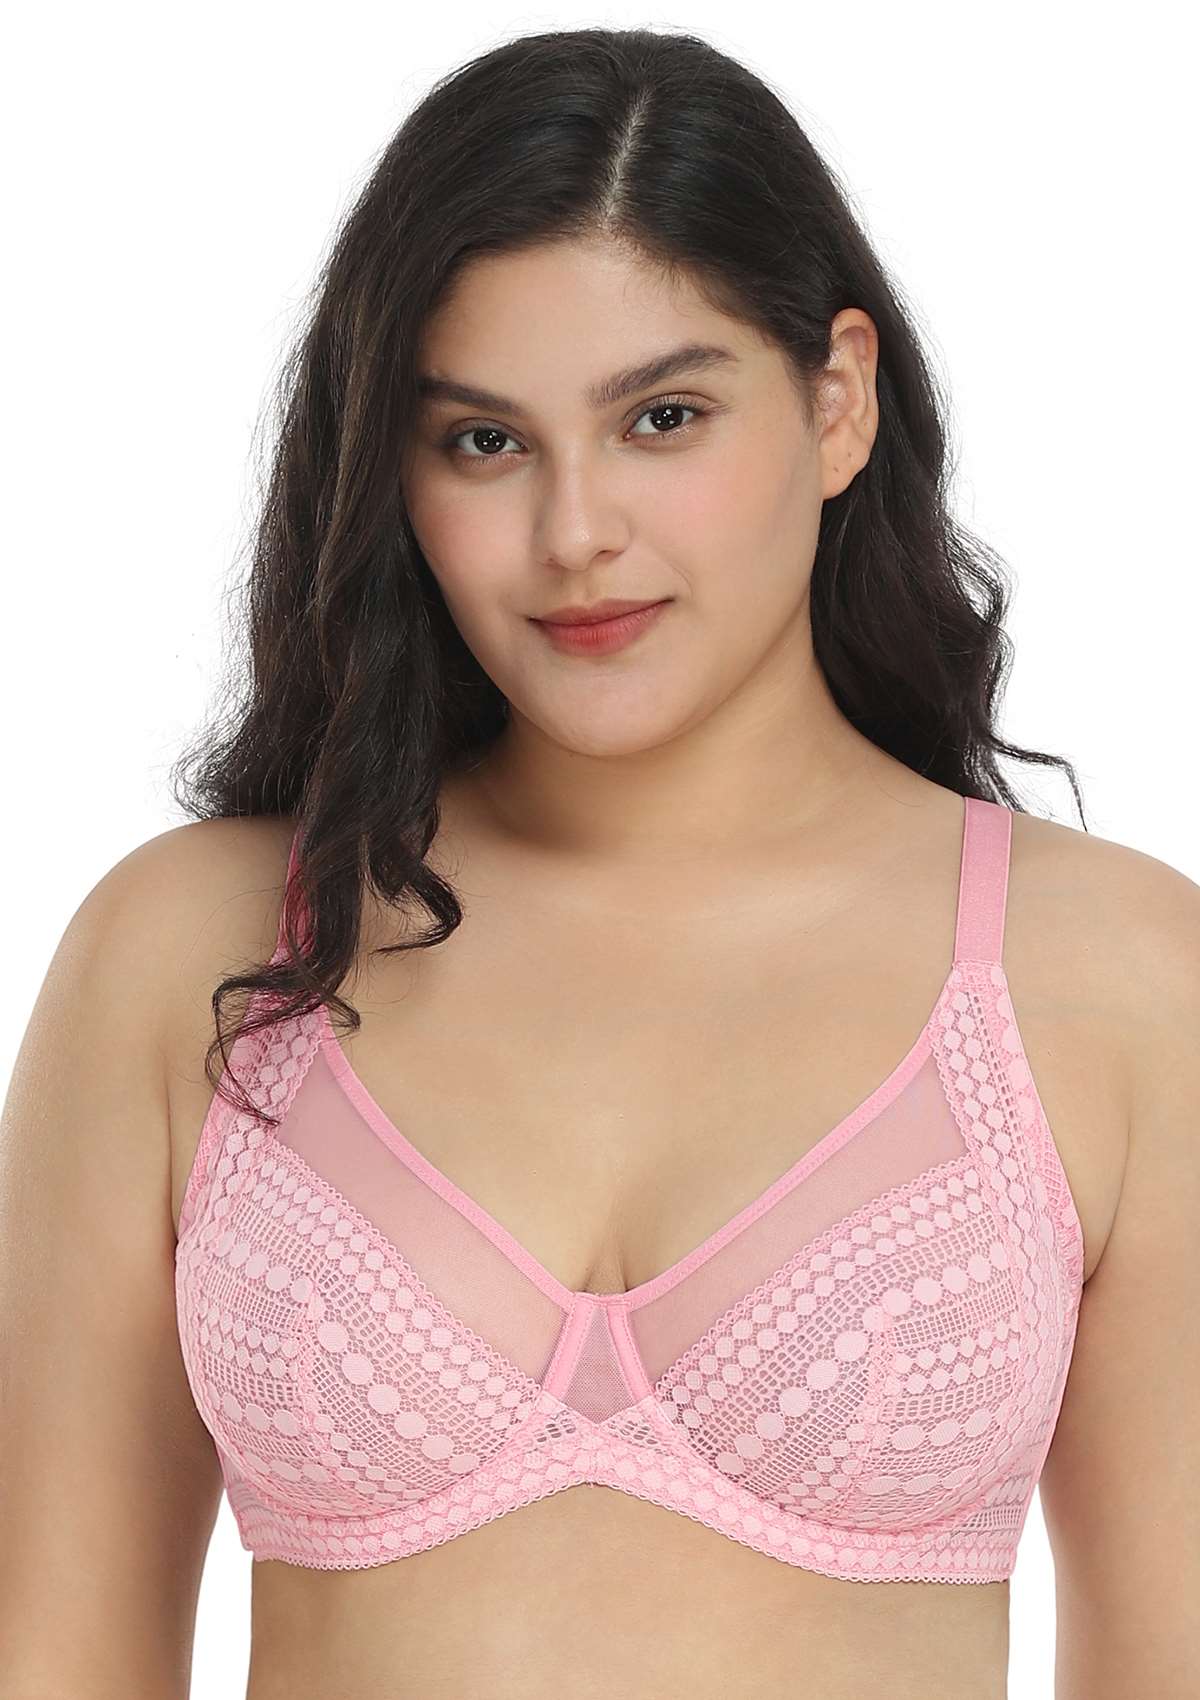 HSIA Heroine Lace Unlined Bra: Bra That Hides Back Fat - Plus Size - Pink / 38 / C